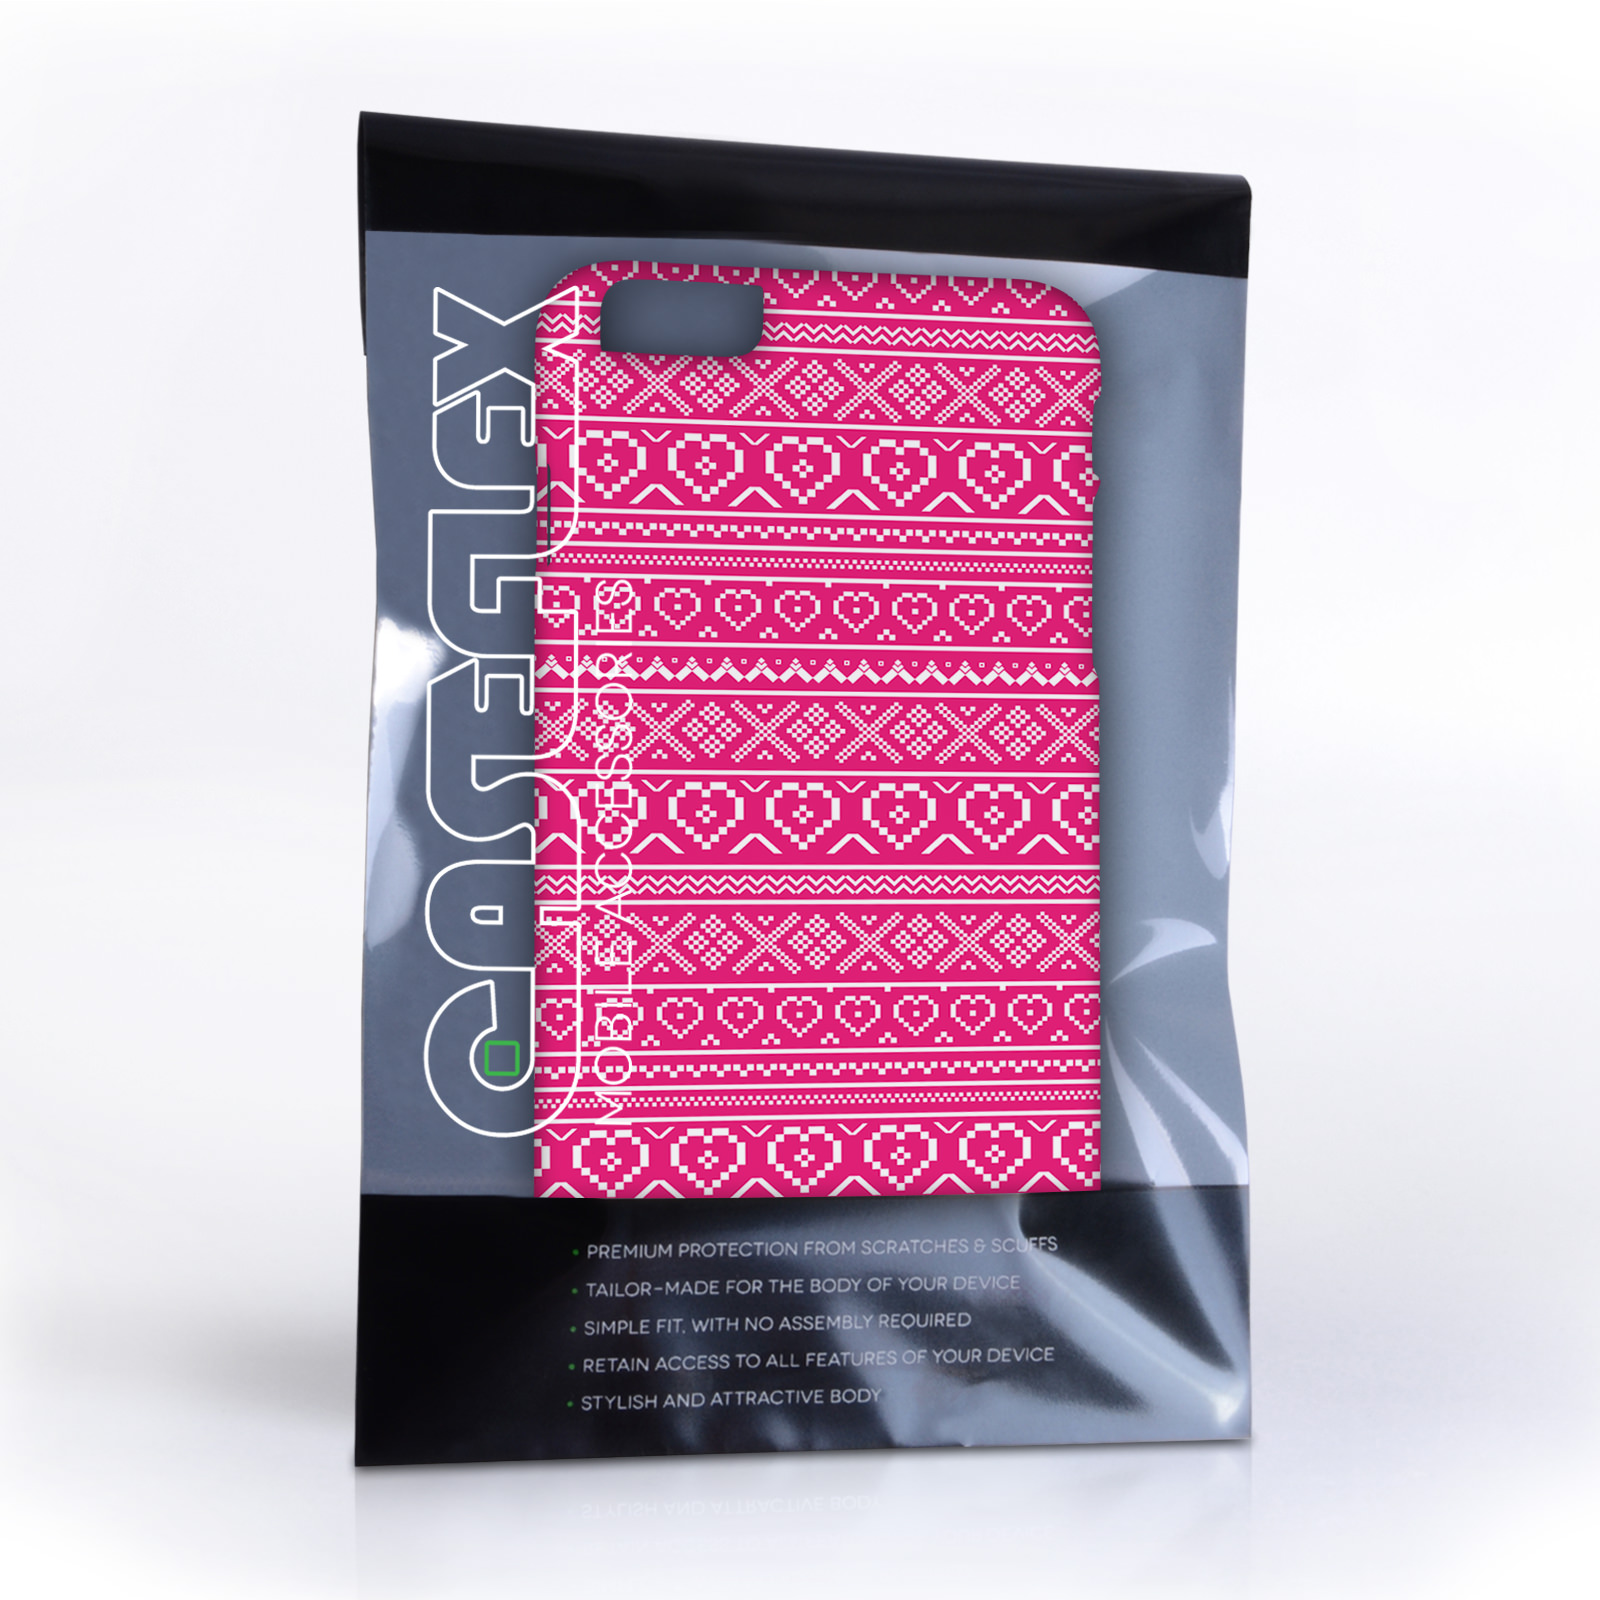 Caseflex iPhone 6 and 6s Plus Fairisle Case – Pink and White